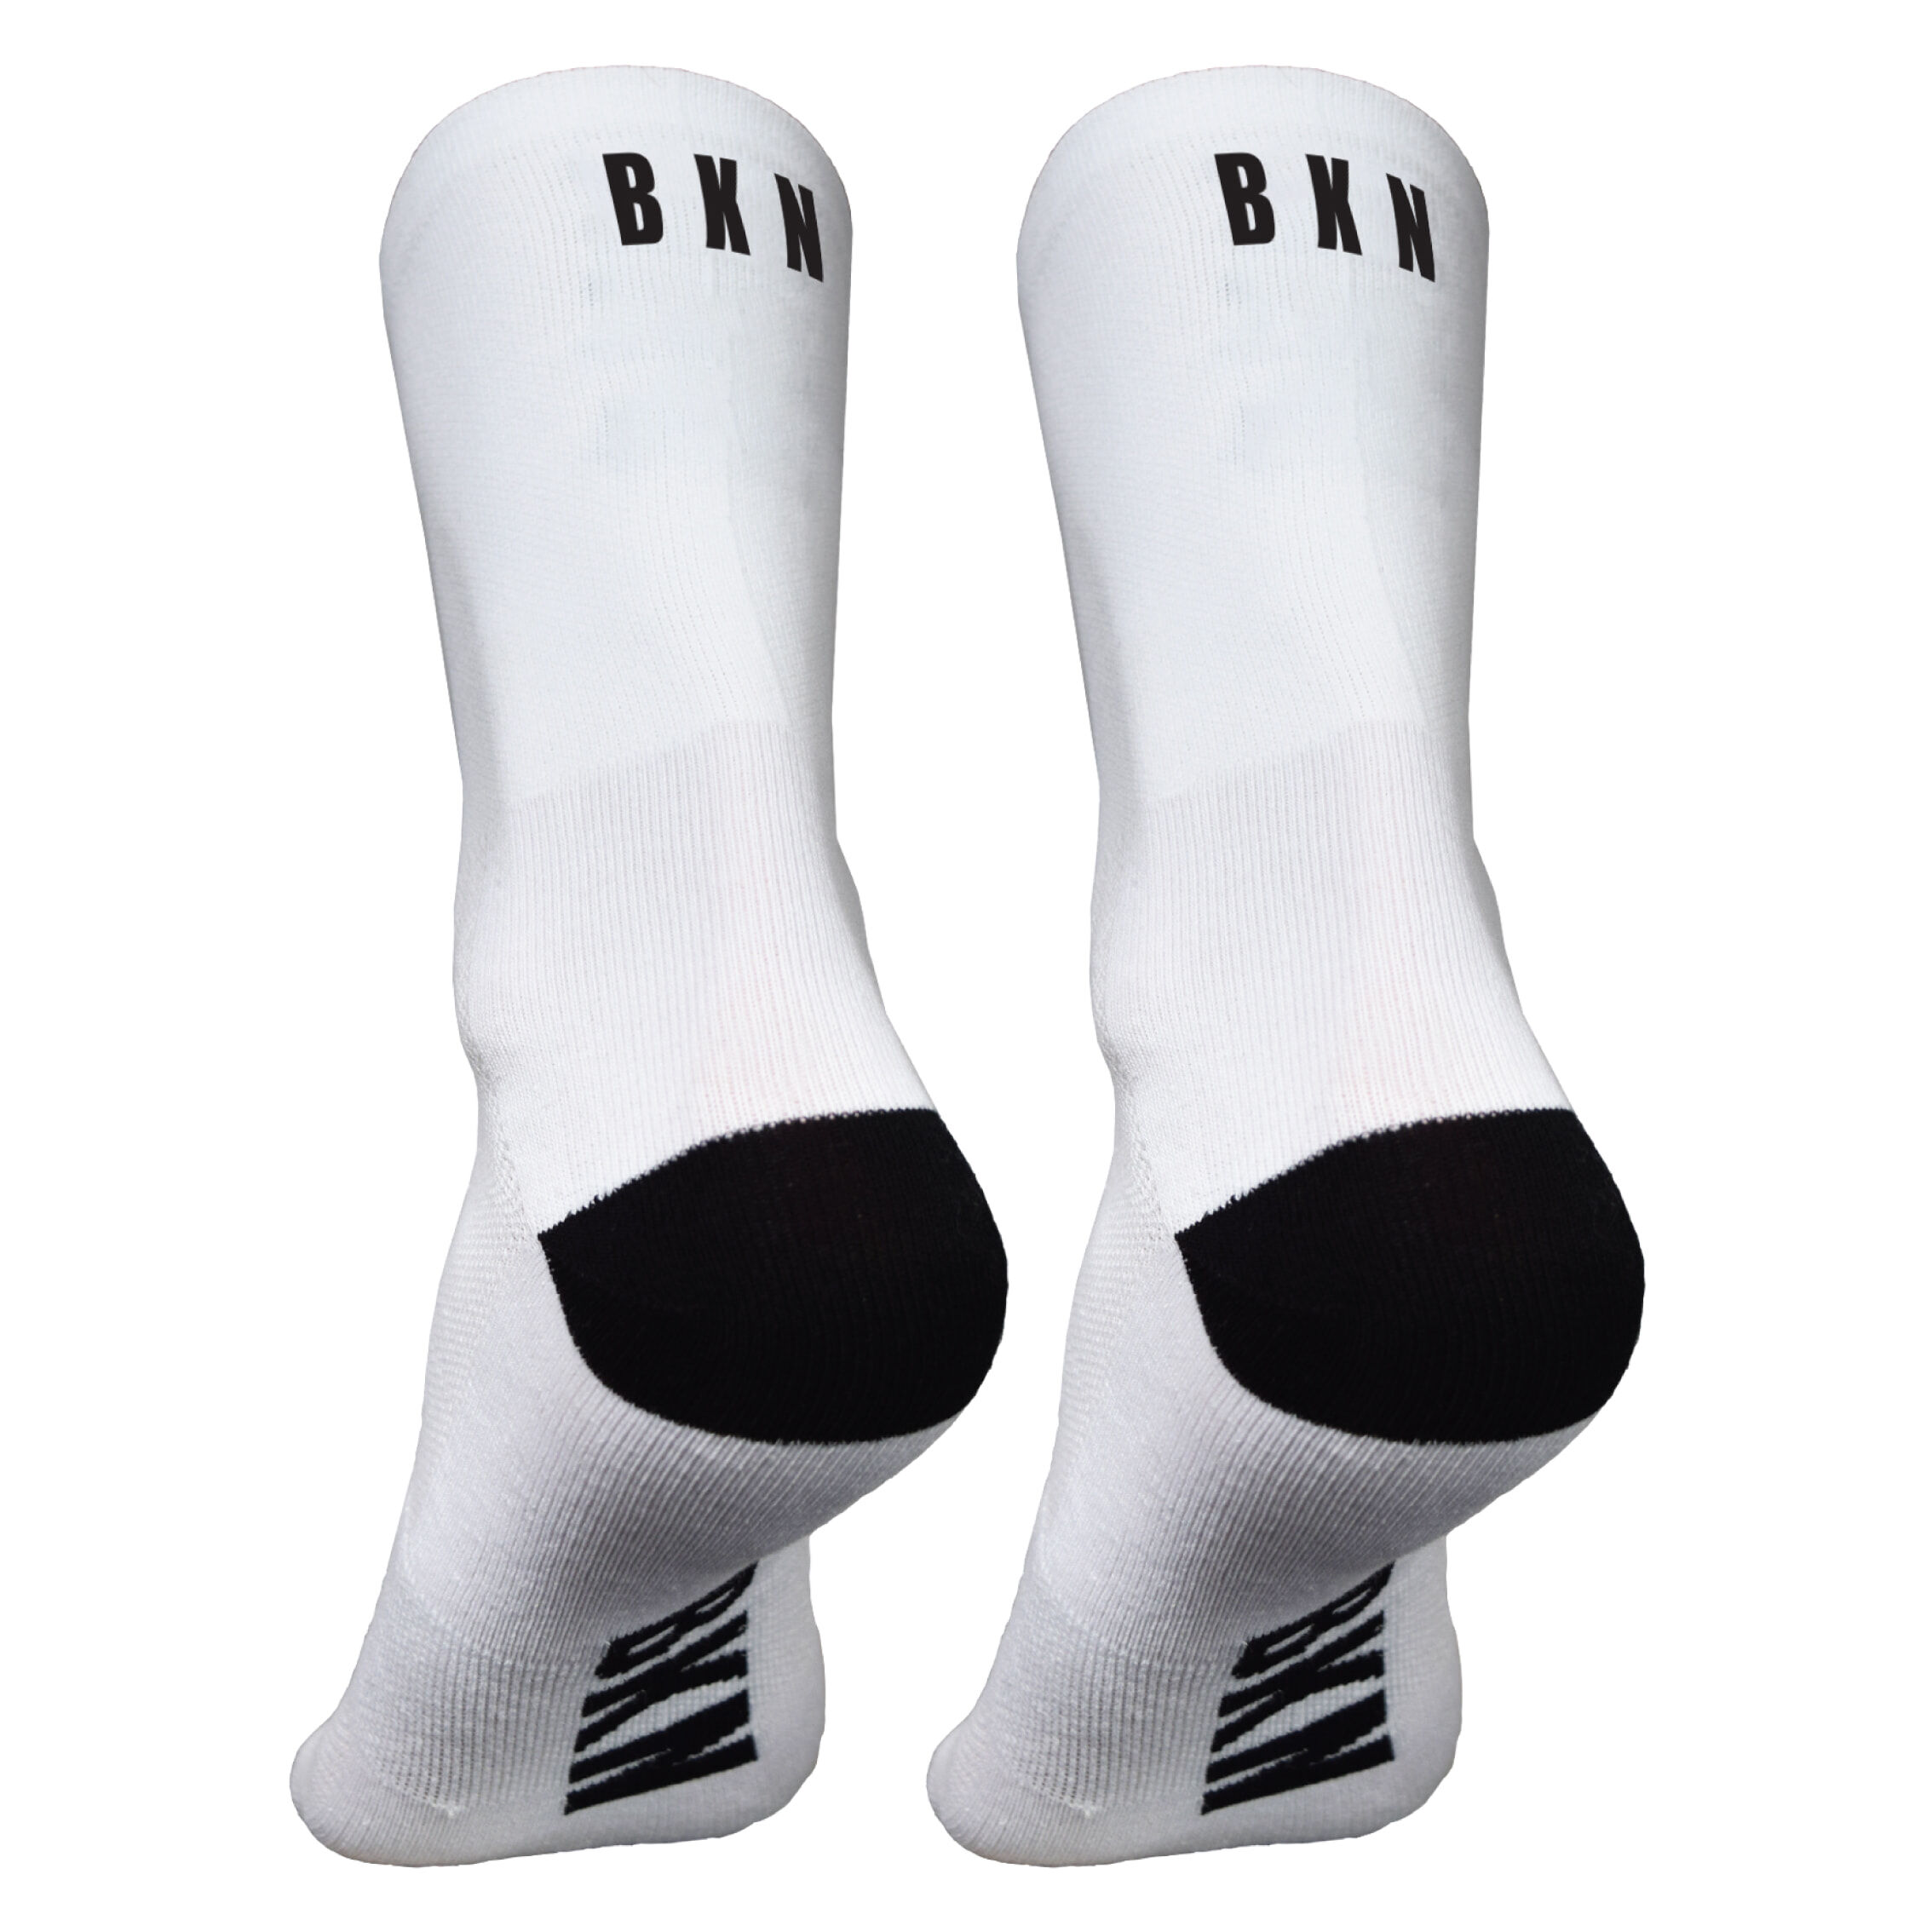 BKN-socks---White-with-small-cuff-logo-v2